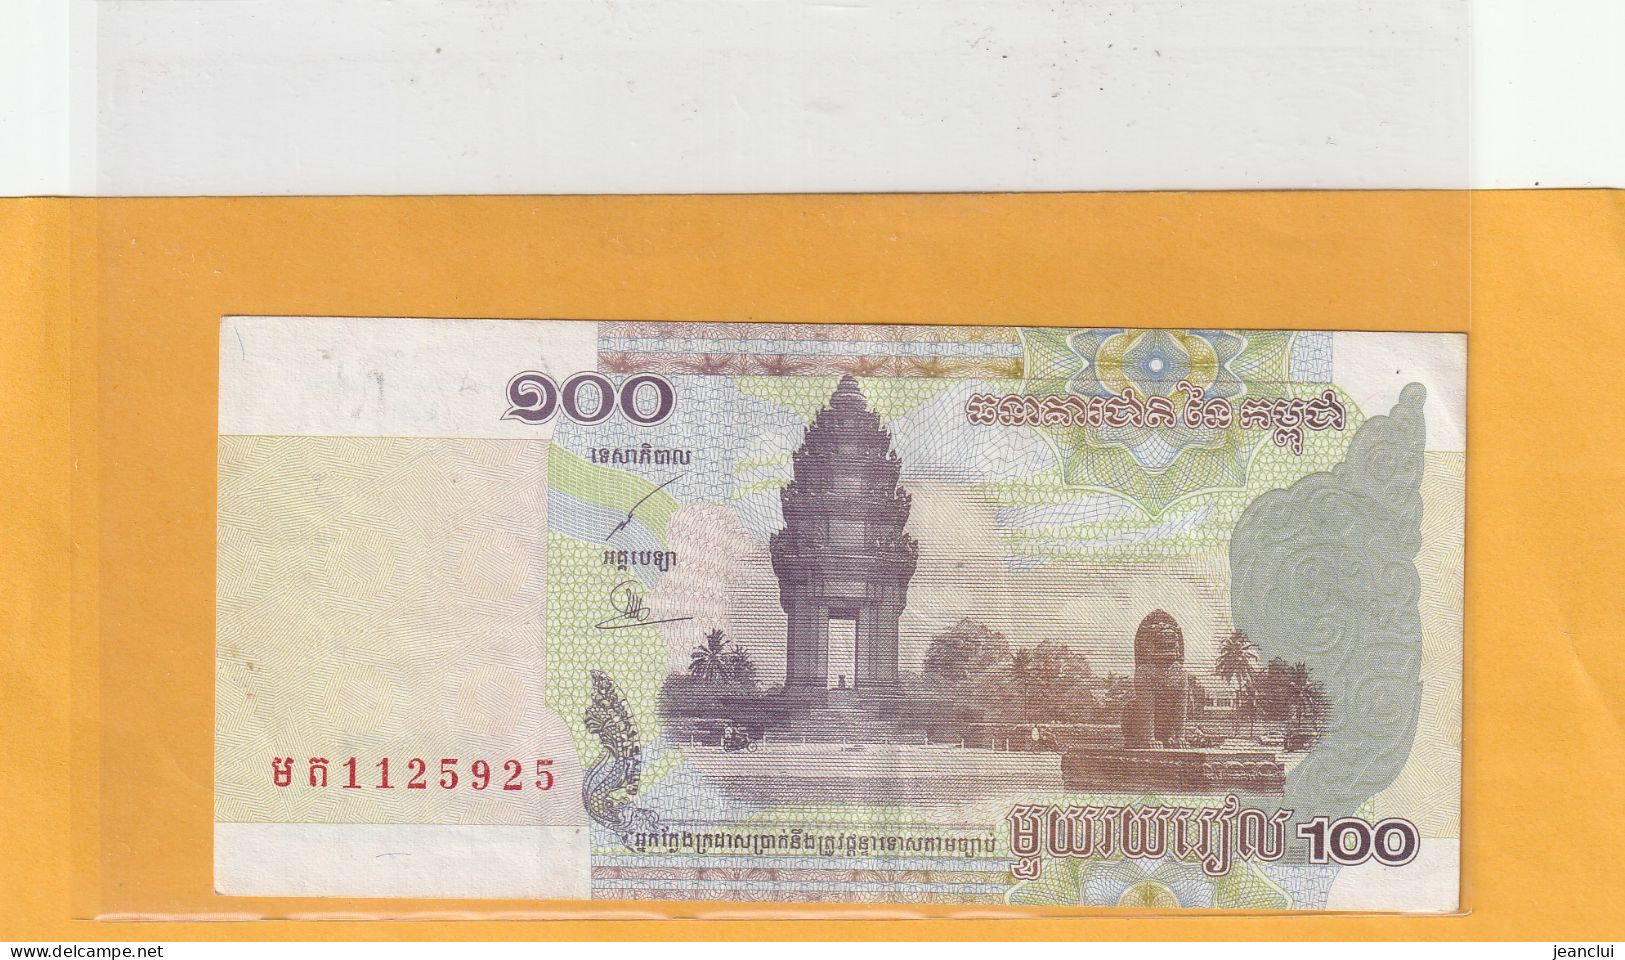 BANQUE NATIONALE DU CAMBODGE  .  100 RIELS  . 2001  . N°  1125925  .  BILLET ETAT LUXE  .  2 SCANNES - Cambodia